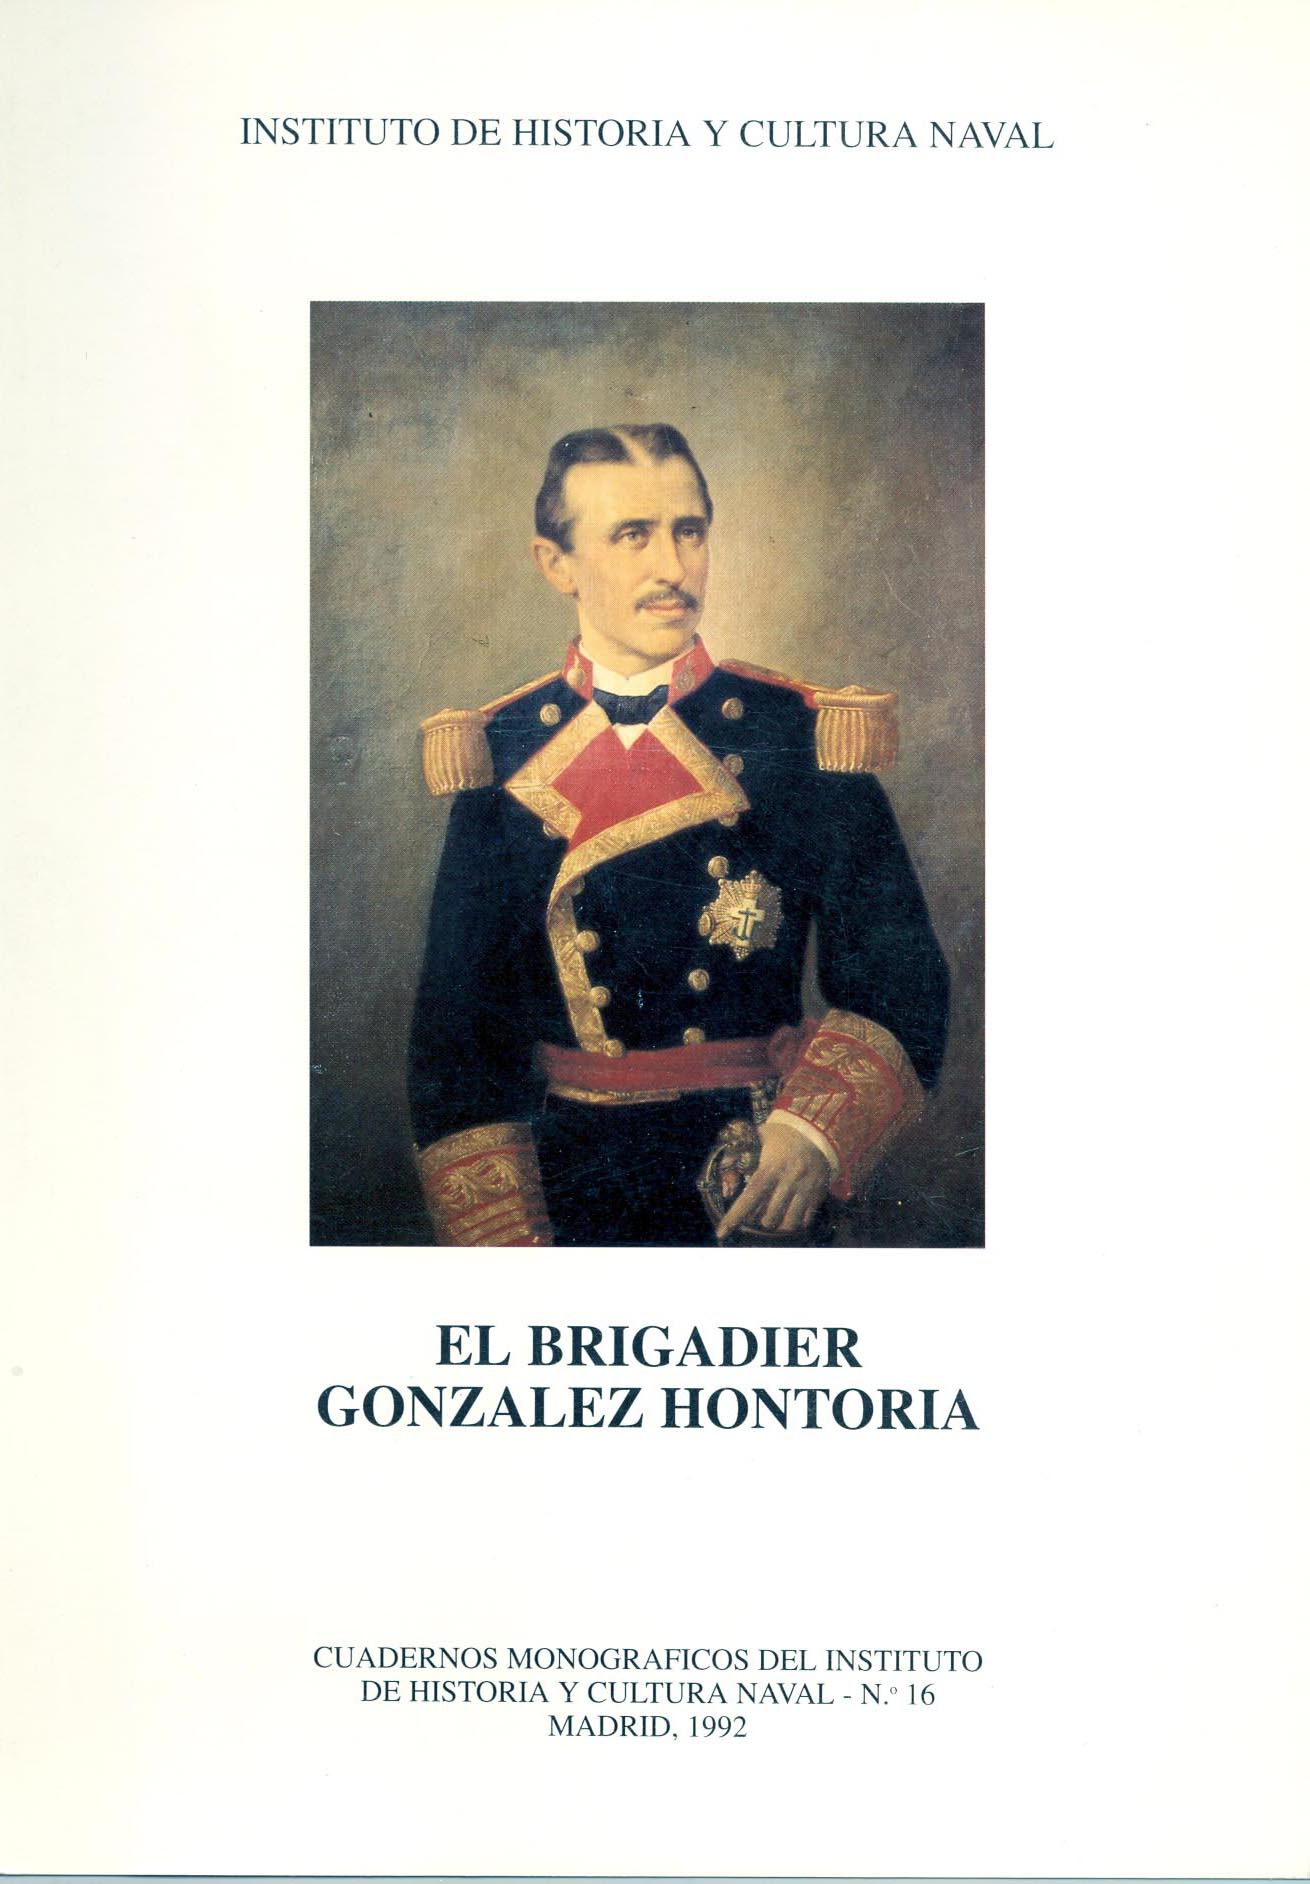 El brigadier González Hontoria